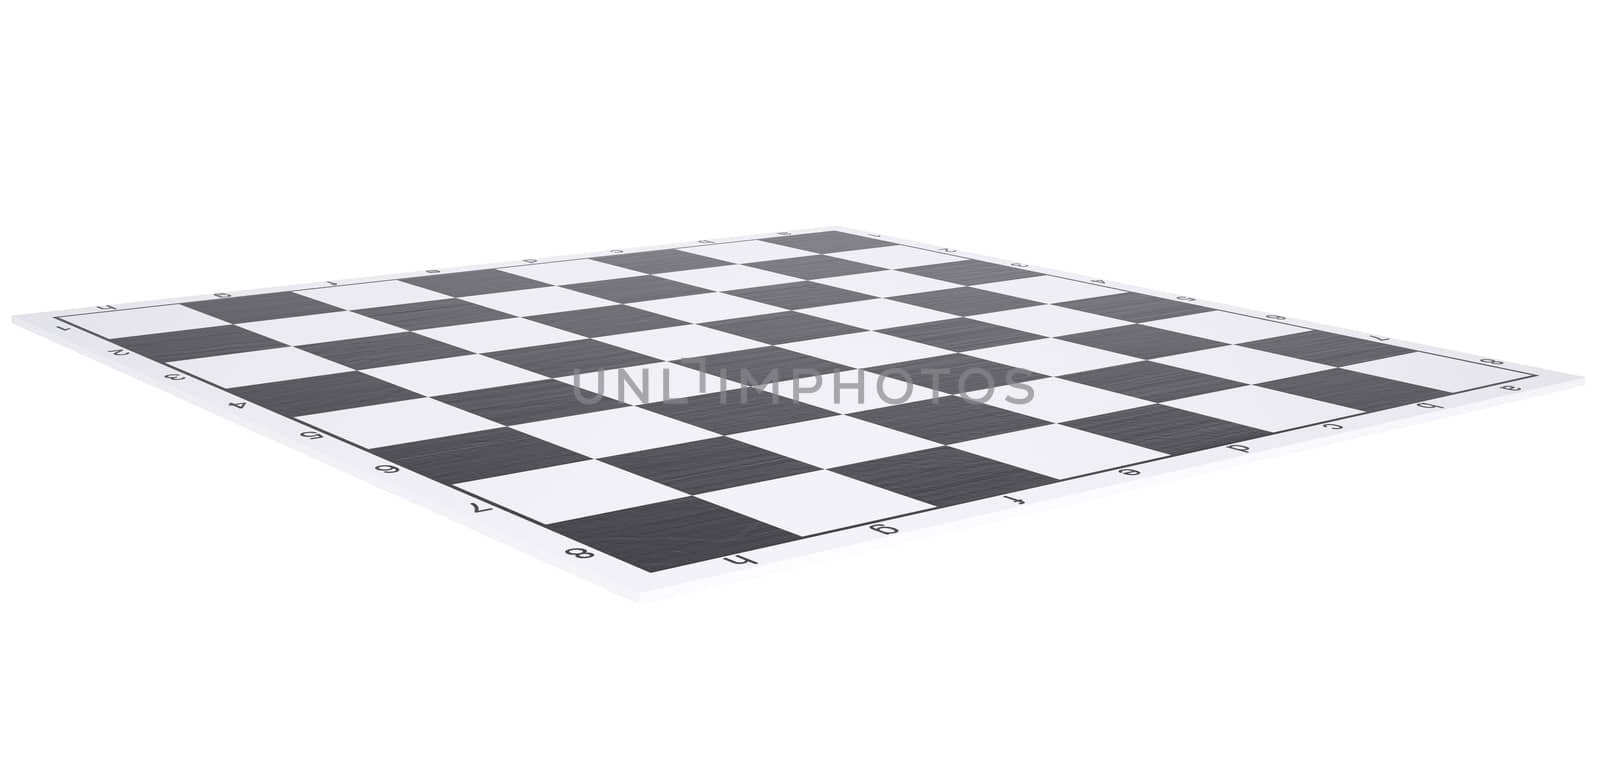 Empty chessboard by cherezoff